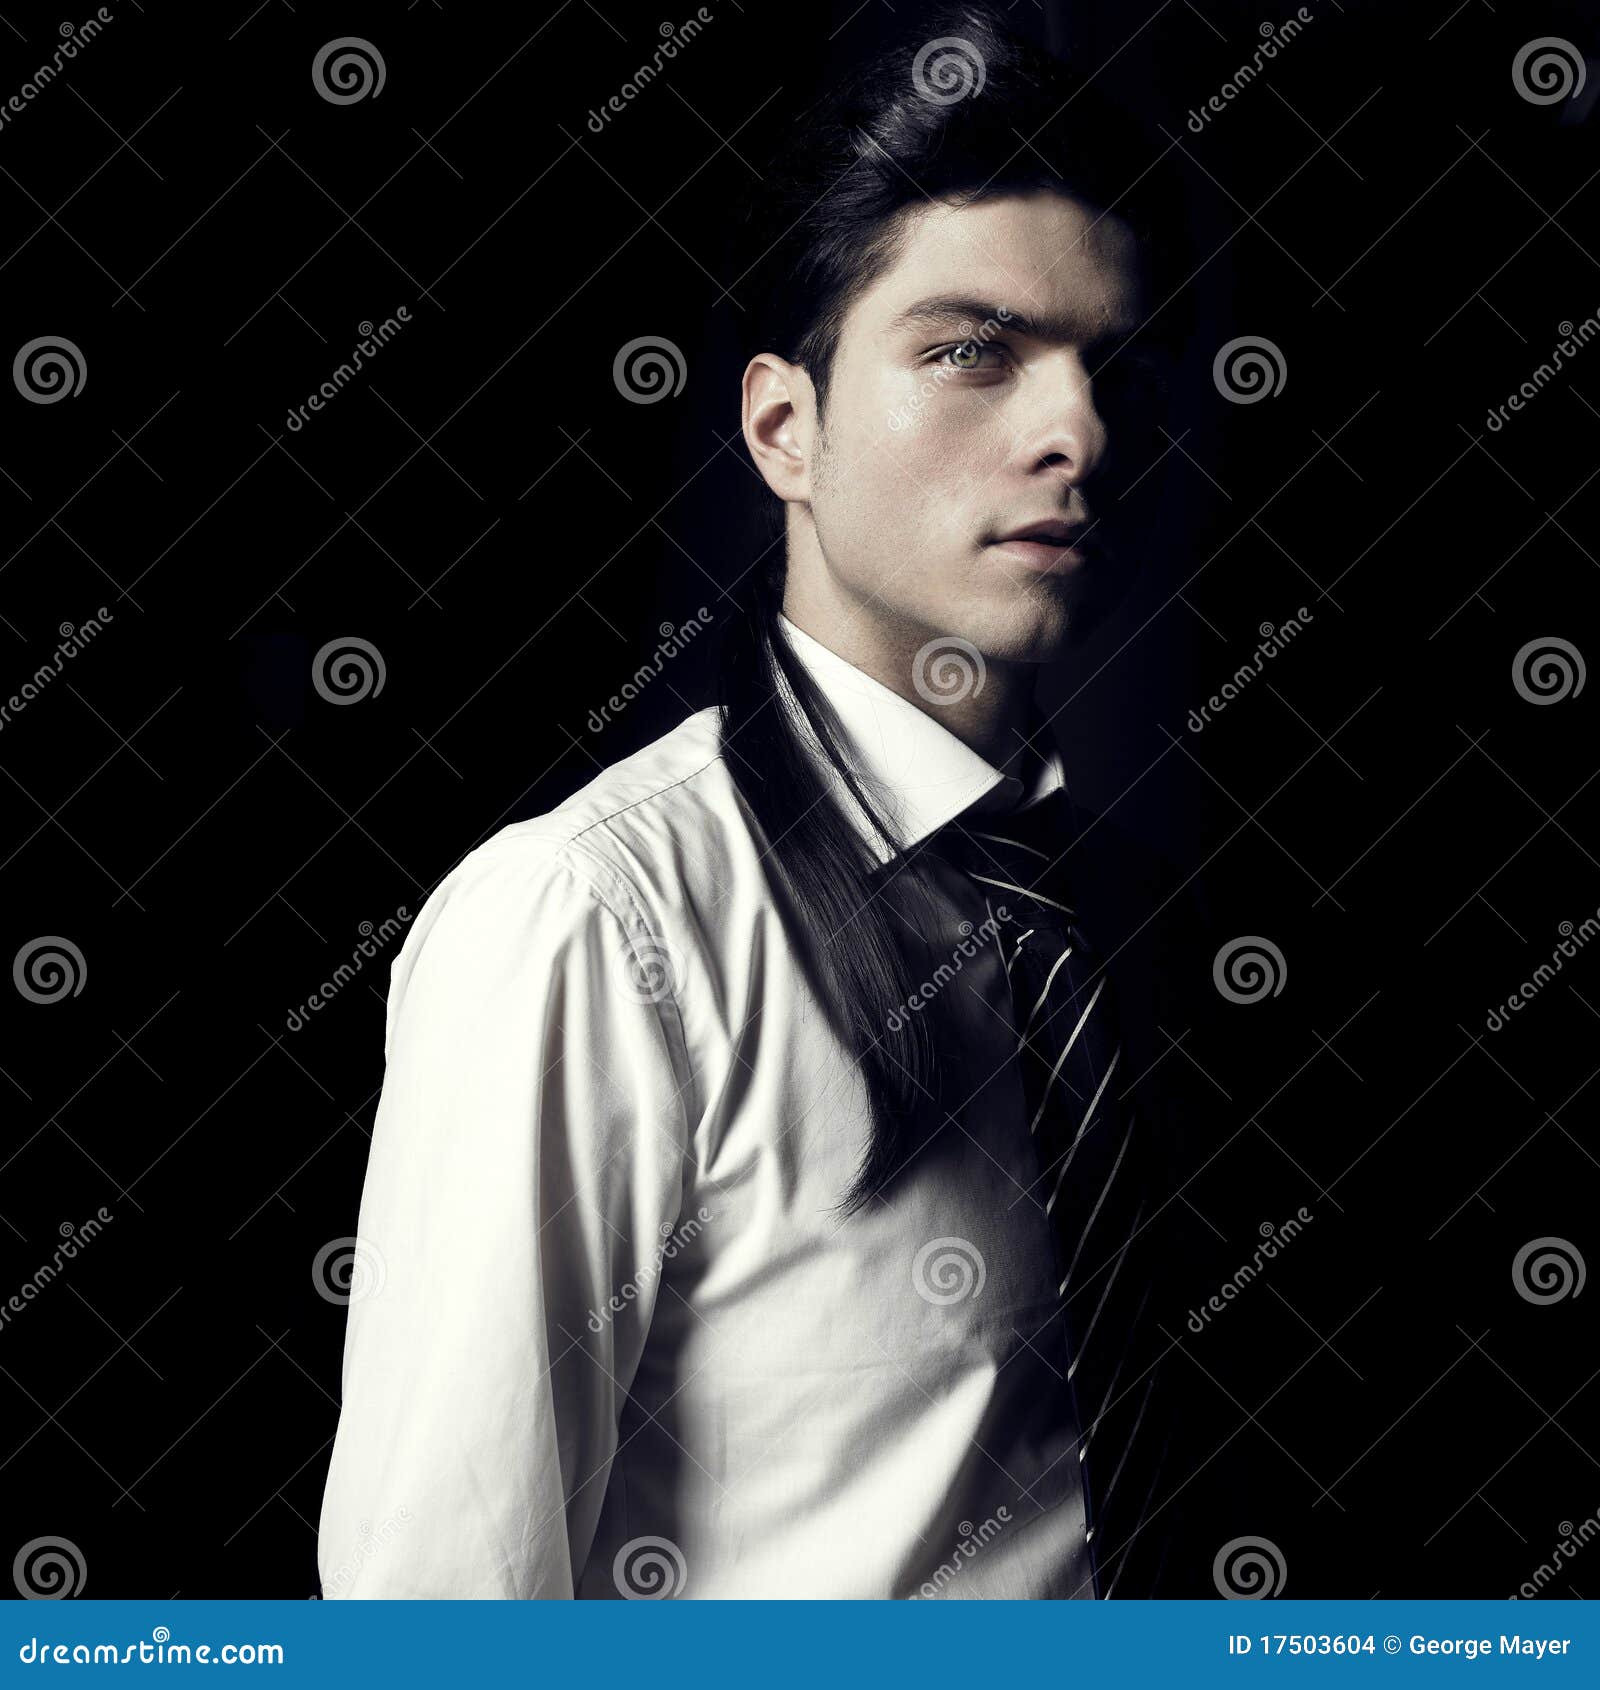 Stylish handsome men stock photo. Image of light, caucasian - 17503604